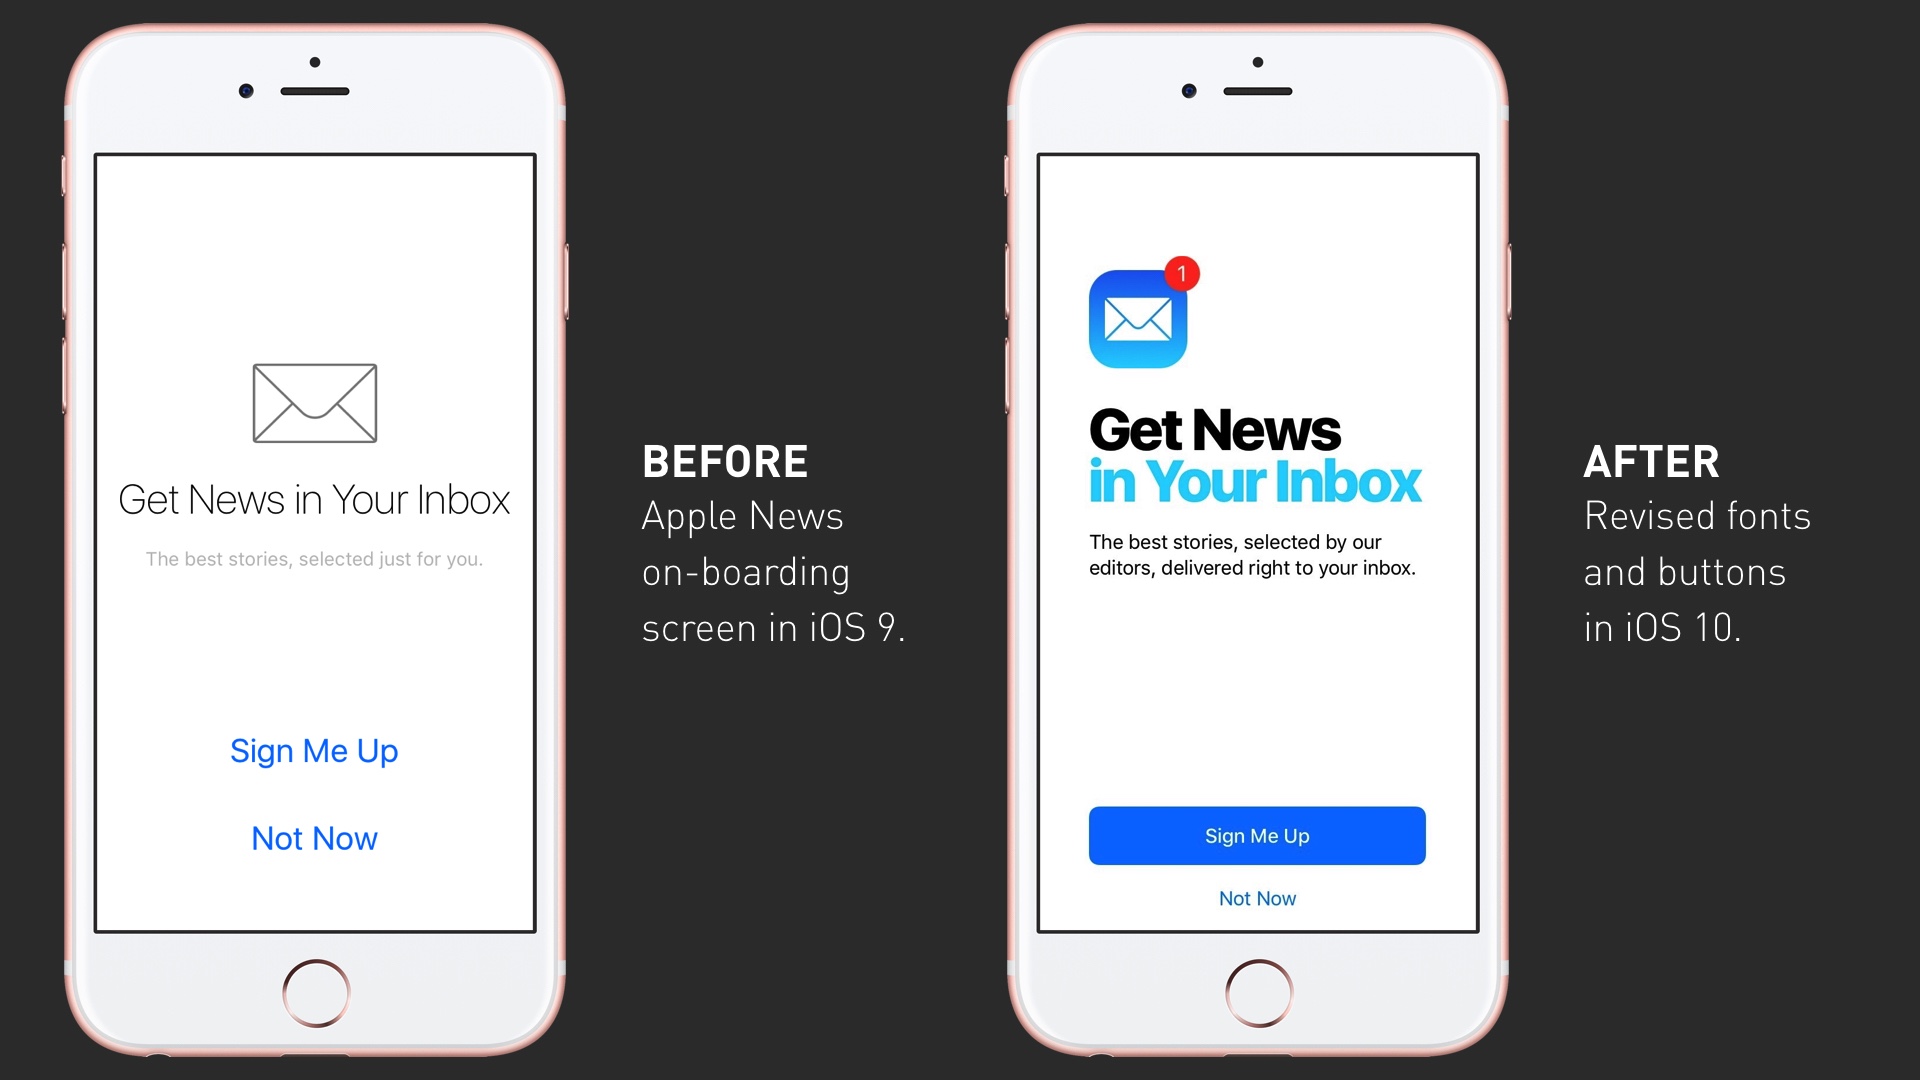 Apple News iOS 10 after